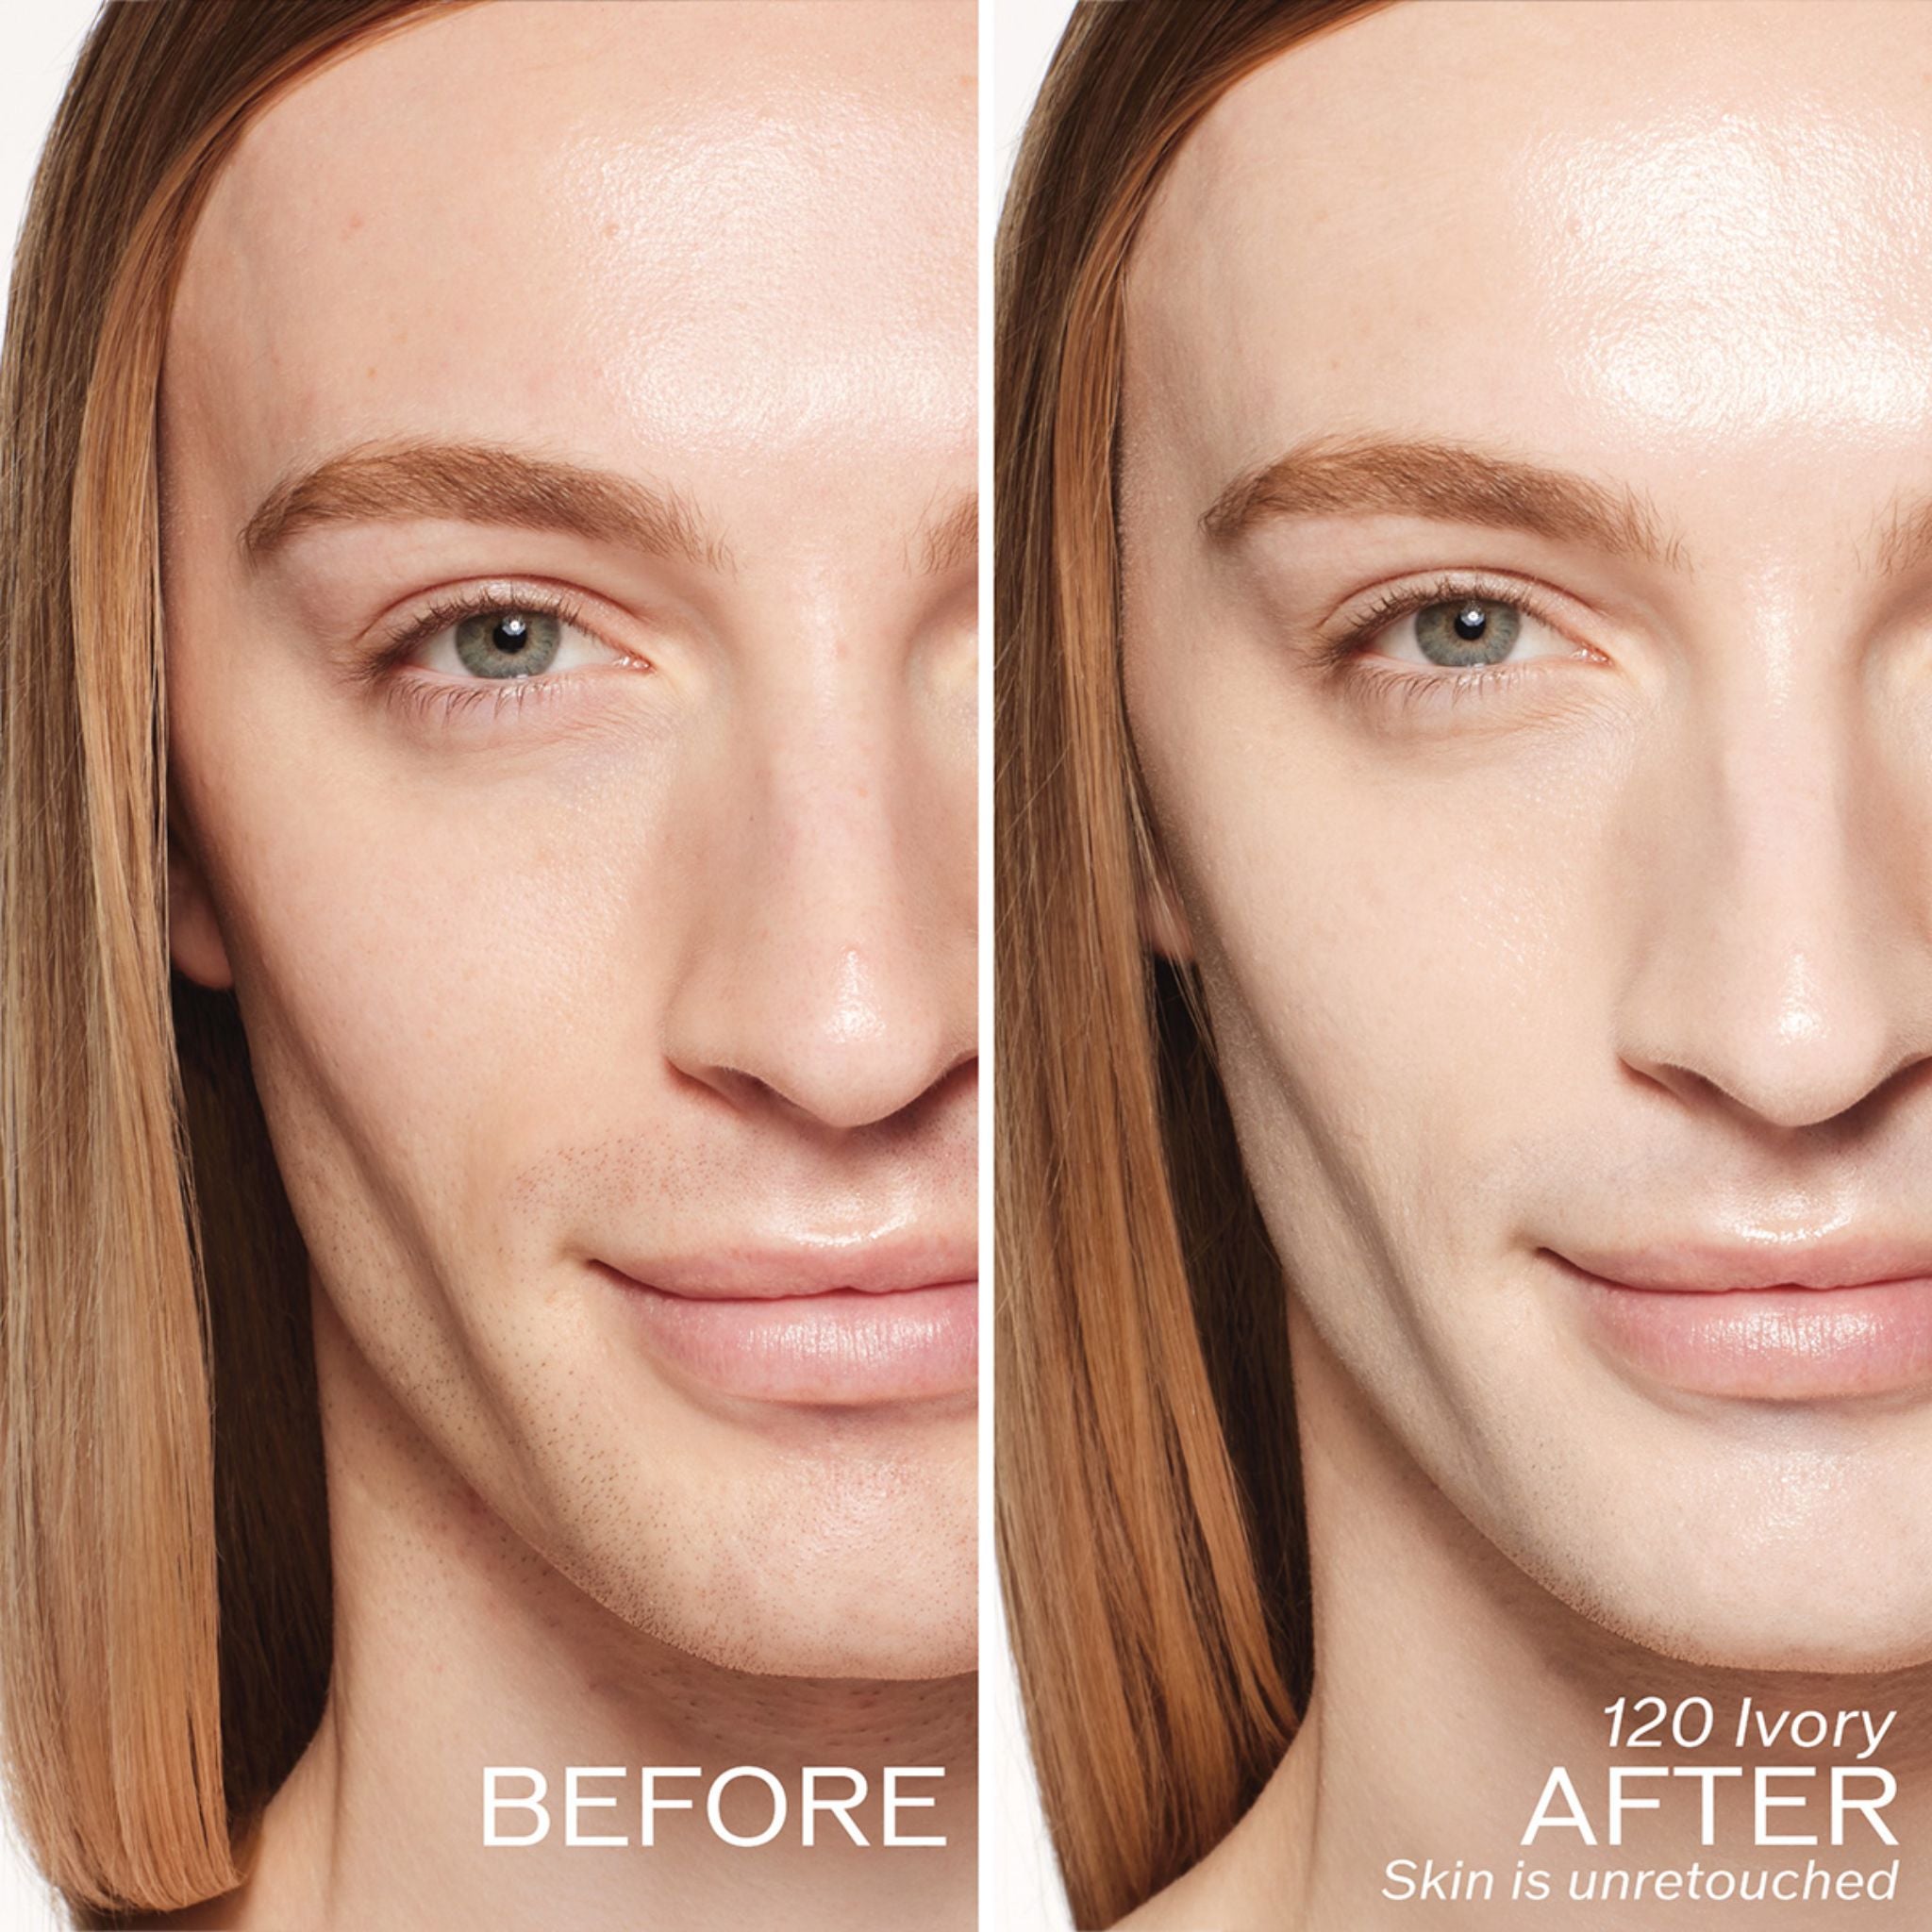 Shiseido Makeup RevitalEssence Skin Glow Foundation in 120 Ivory (30ml)